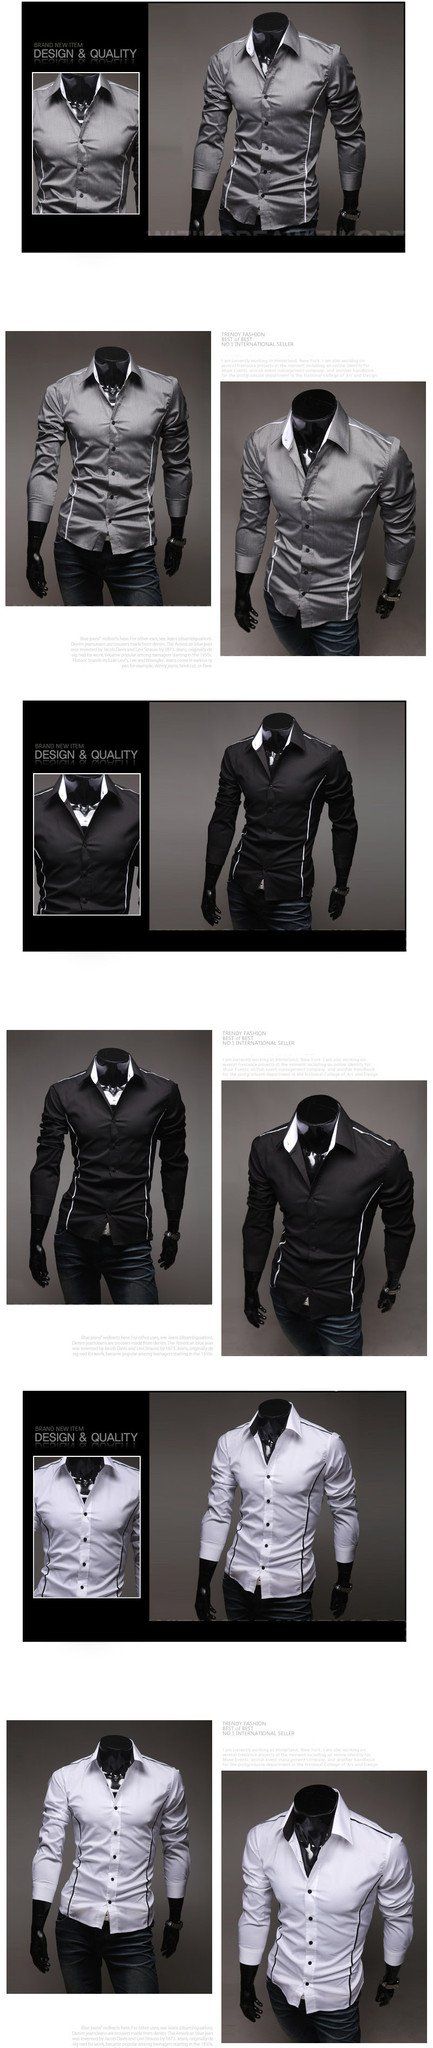 Men's Dress Shirt With Pin Stripe Side - TrendSettingFashions 